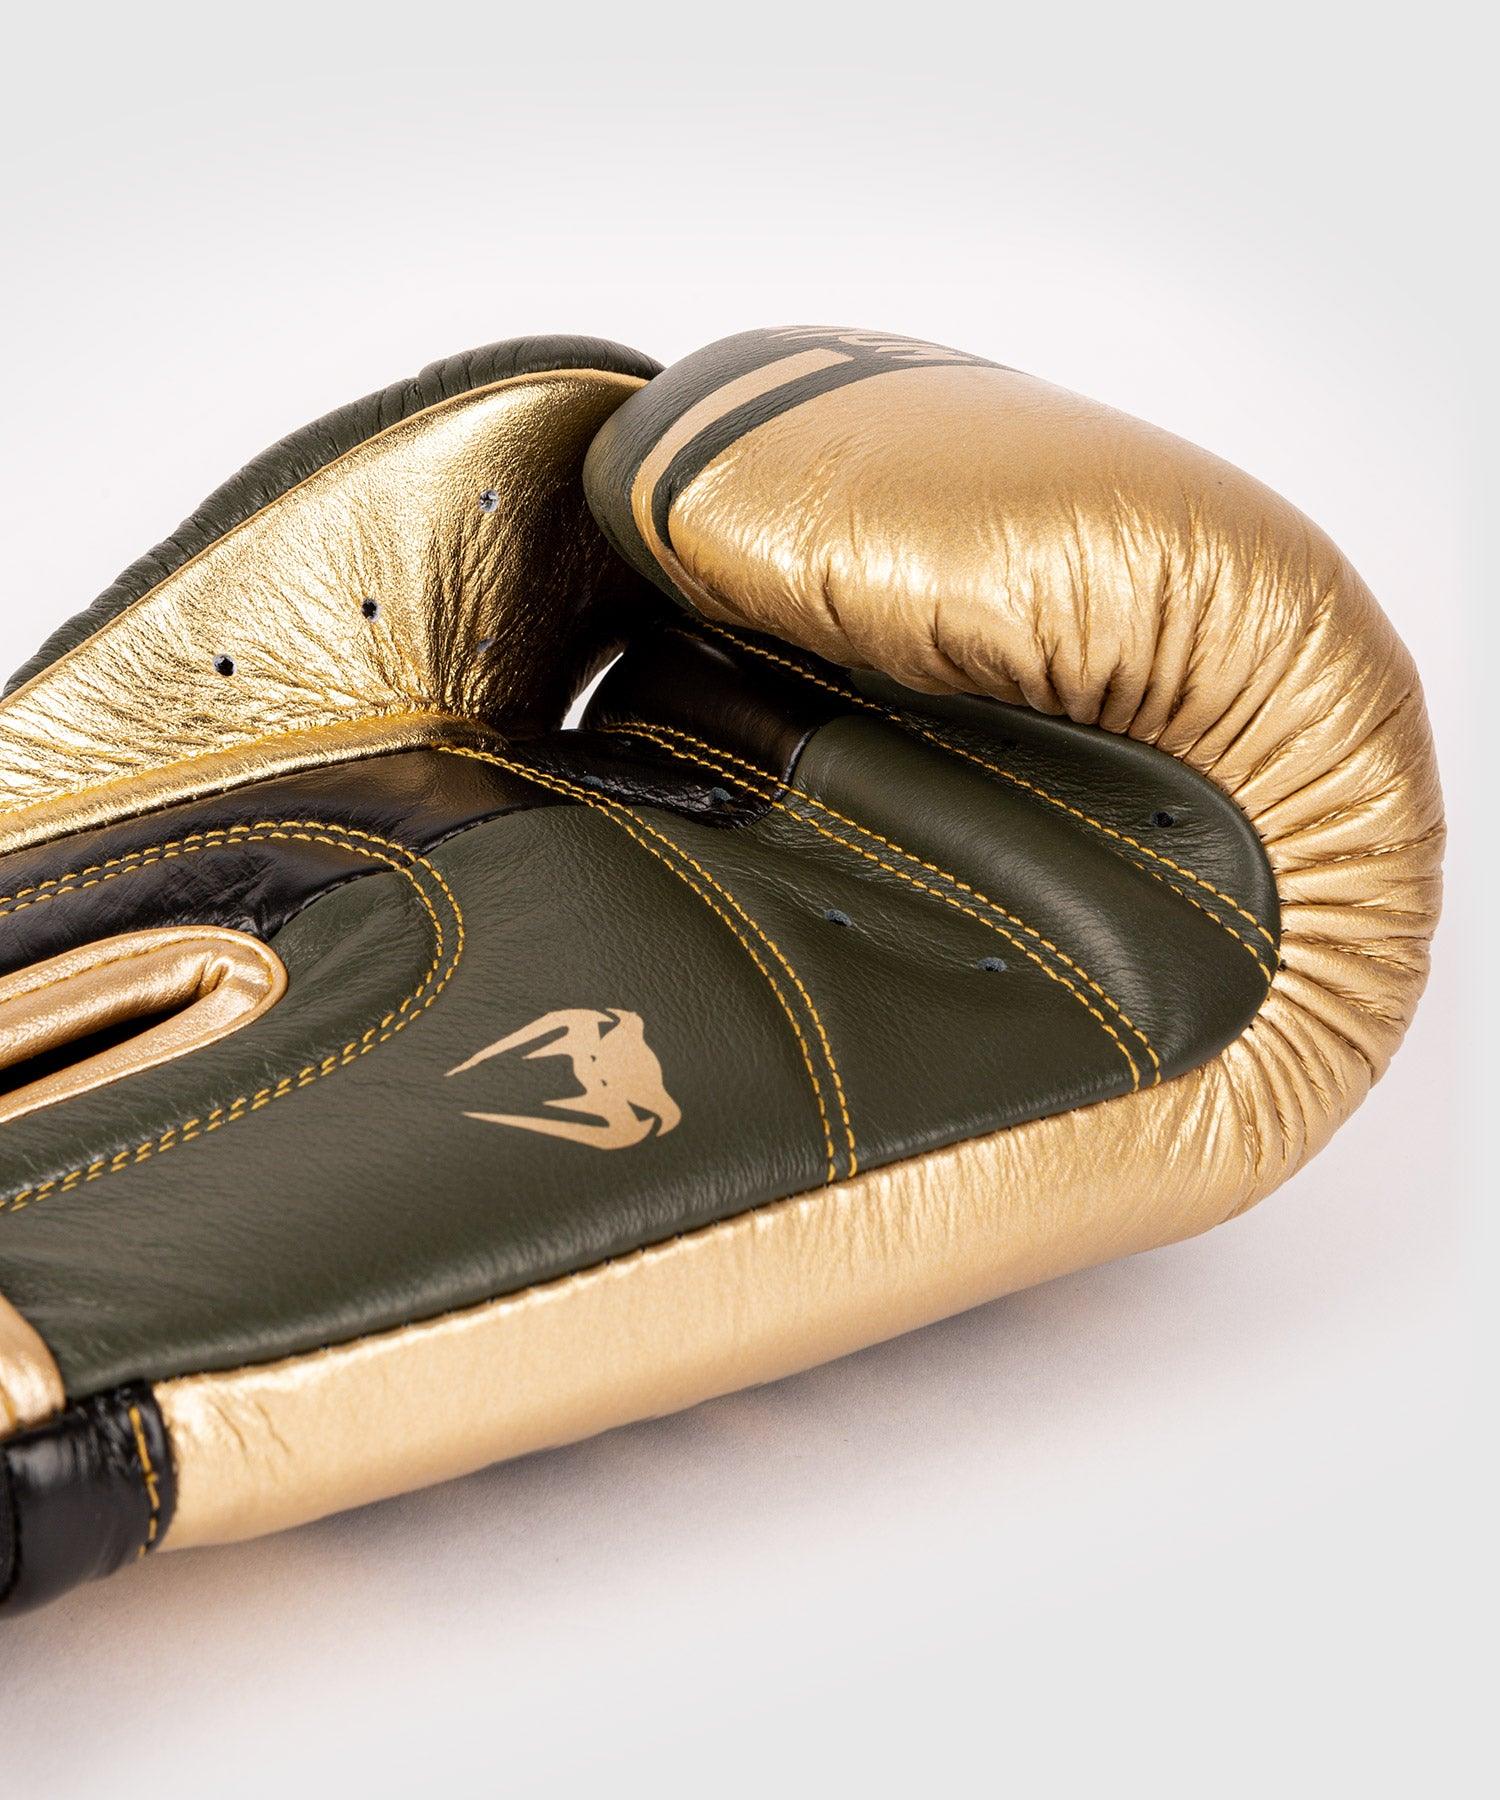 Venum Shield Pro Boxing Gloves Velcro - Khaki/Gold Picture 5